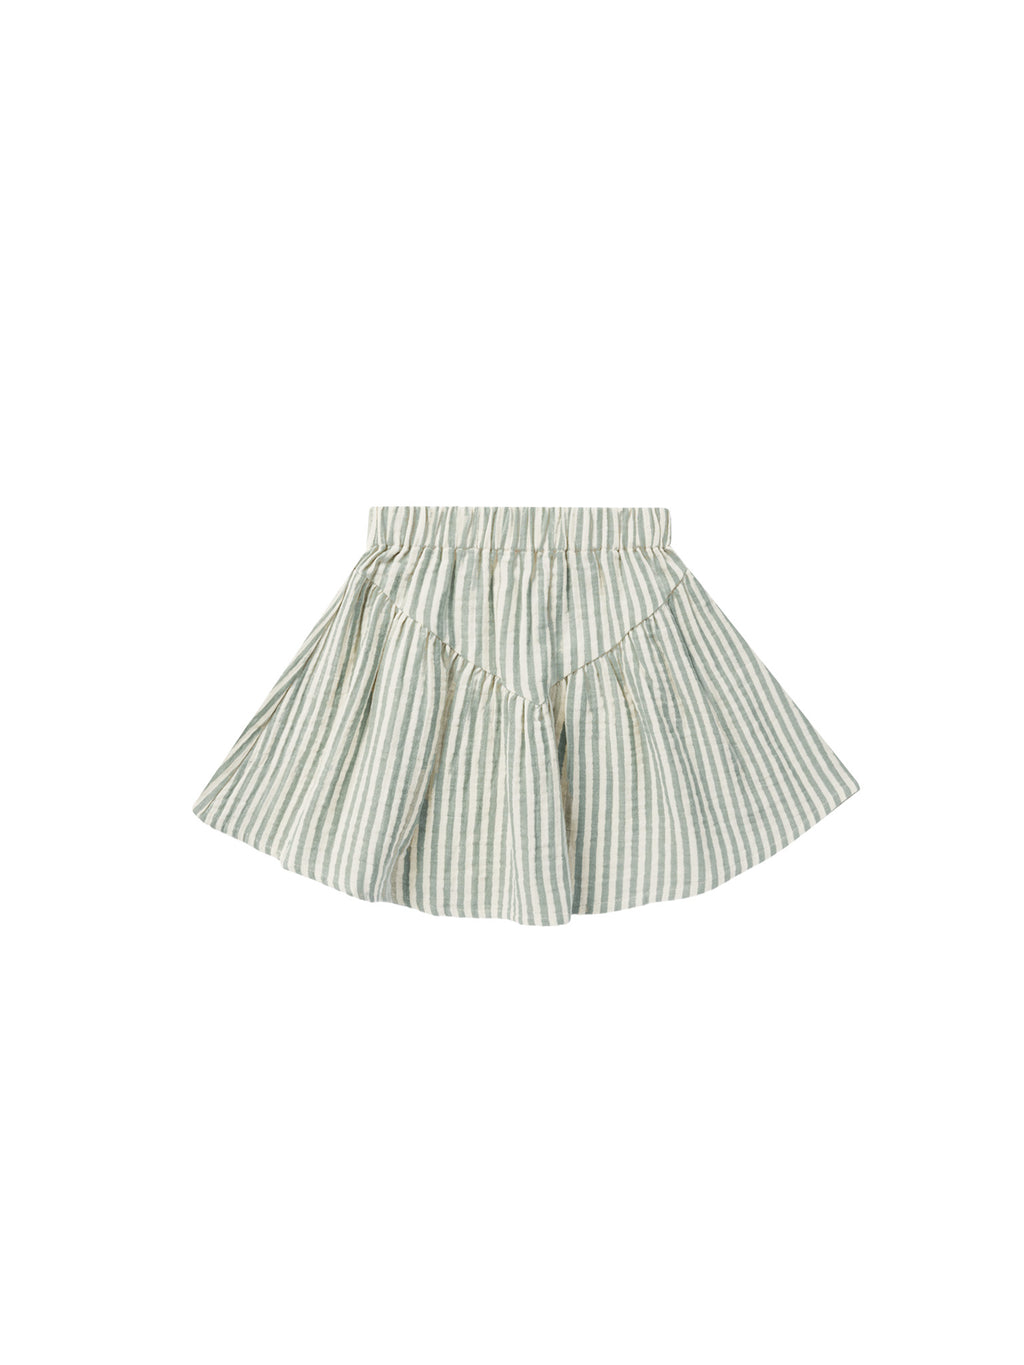 Rylee + Cru Sparrow Skirt - Summer Stripe